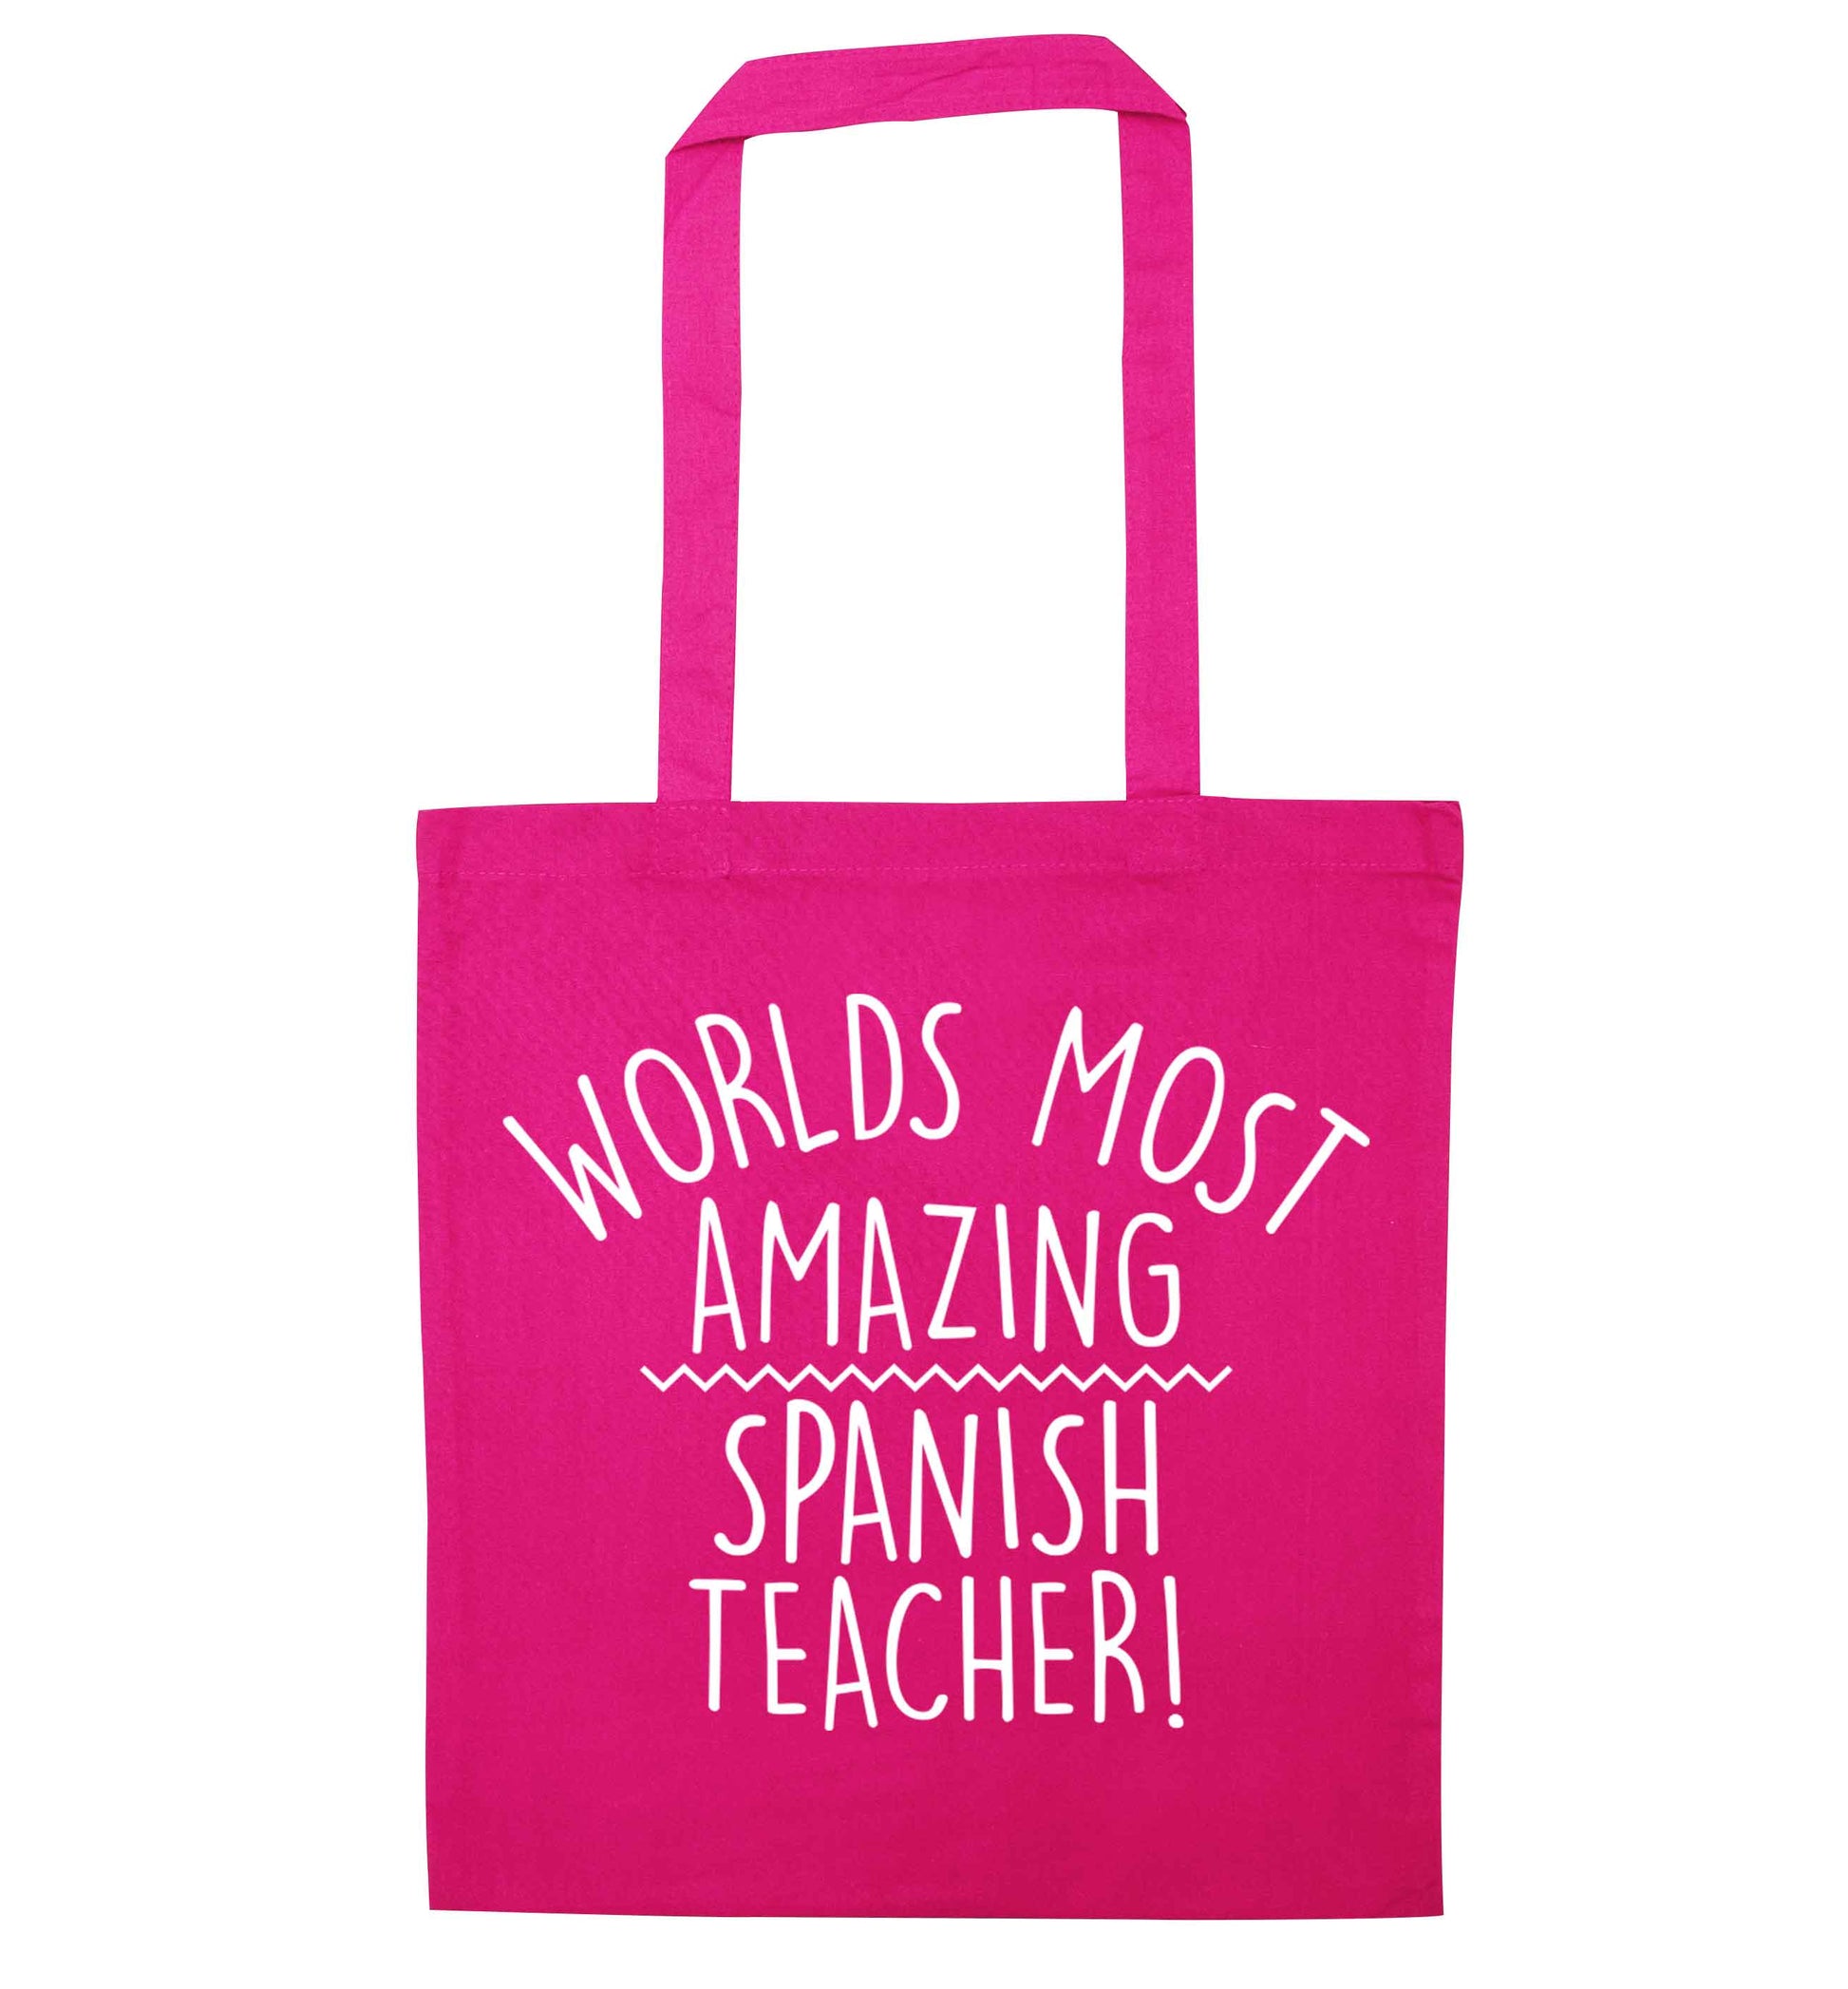 Worlds most amazing Spanish teacher pink tote bag